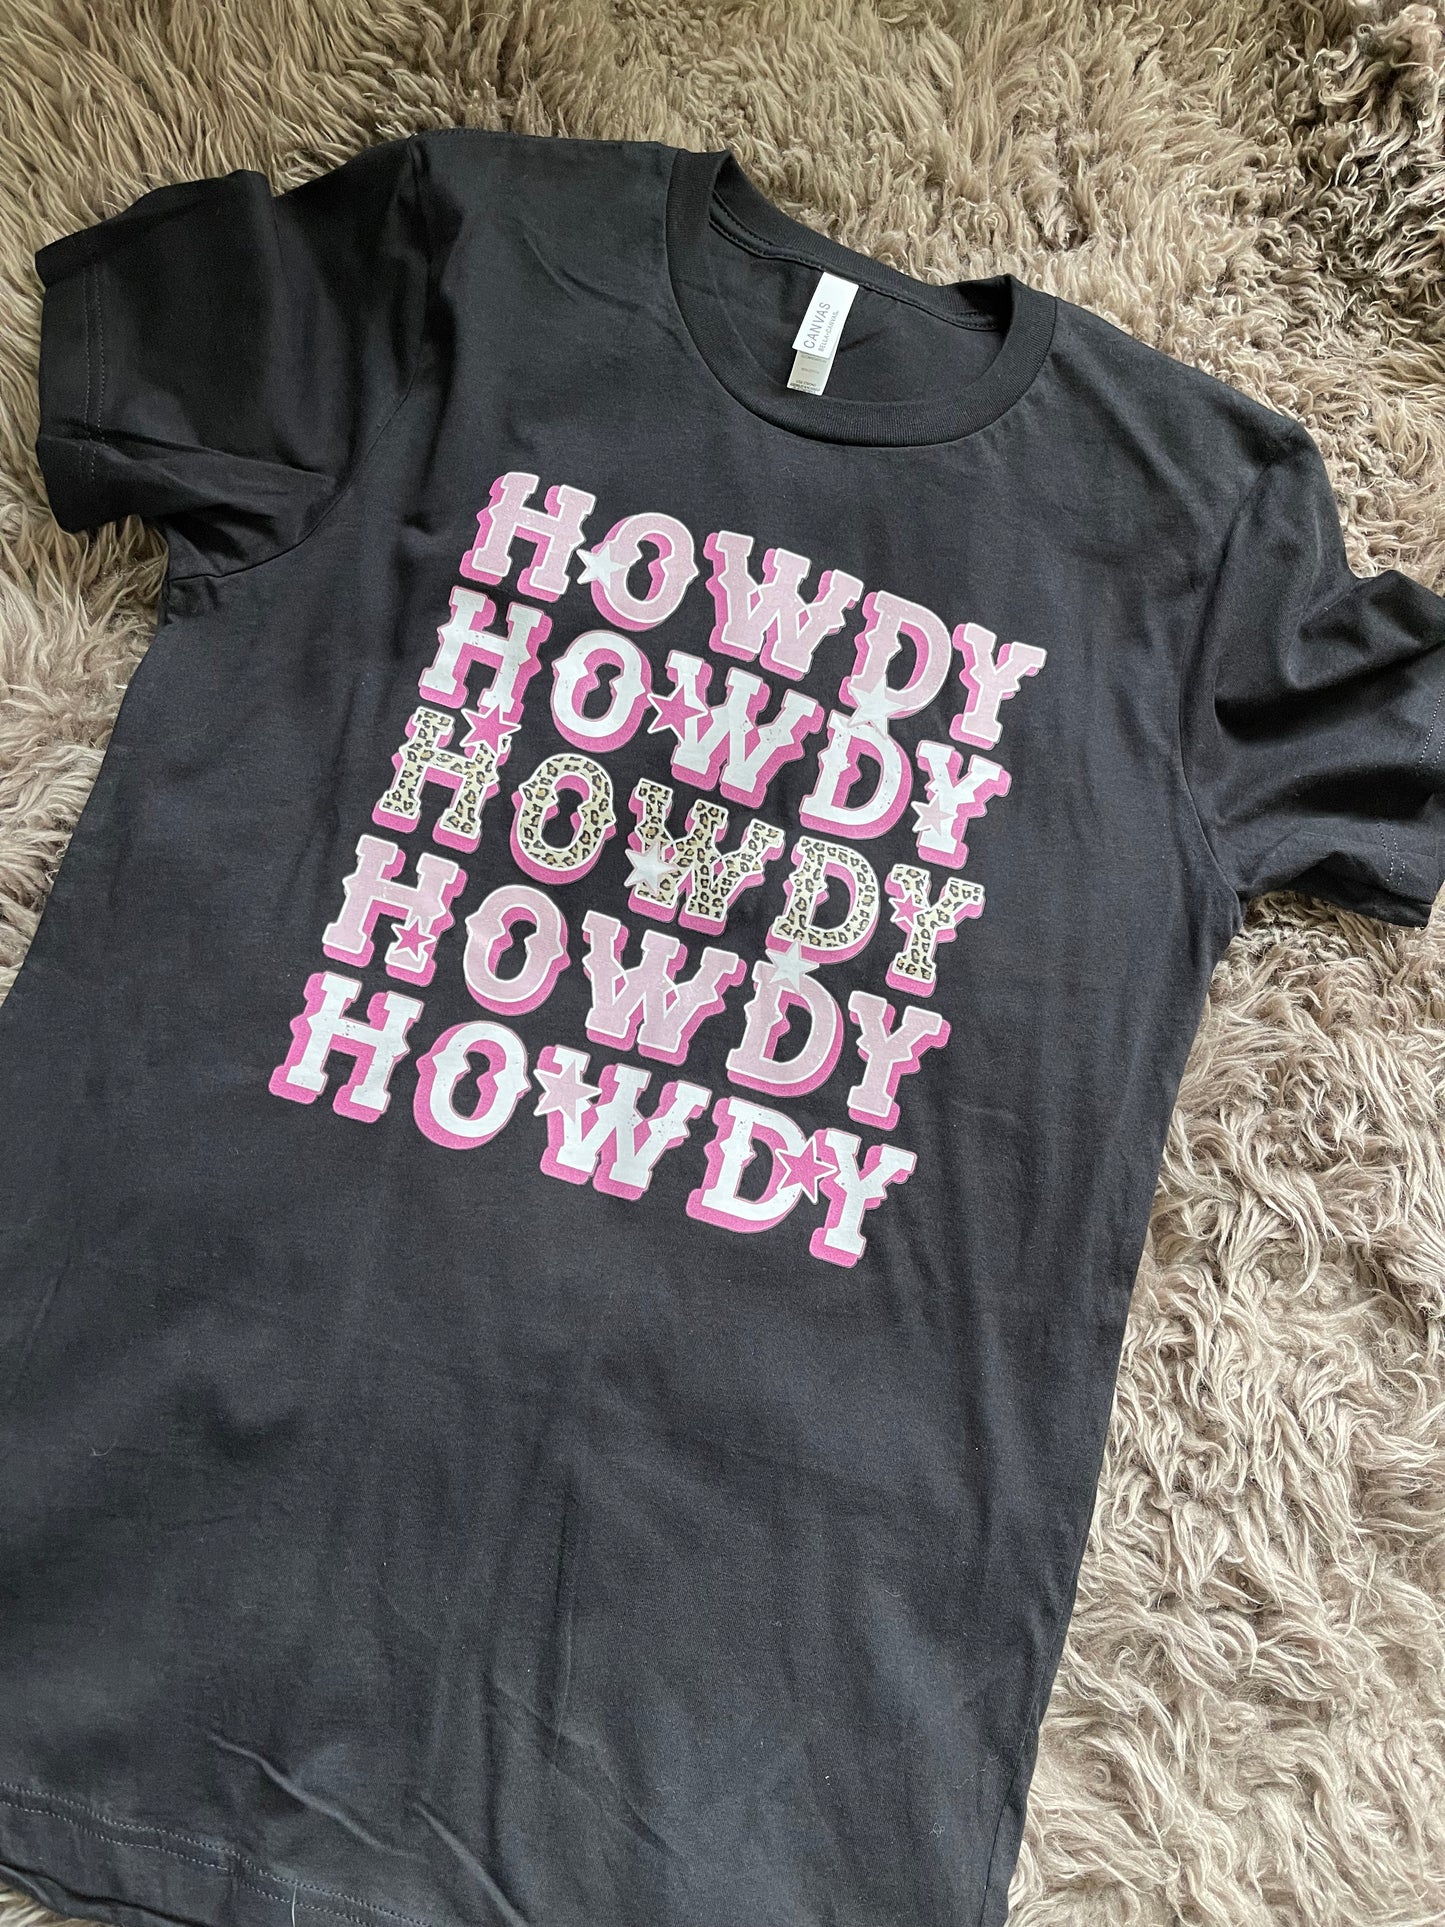 Howdy Shirt